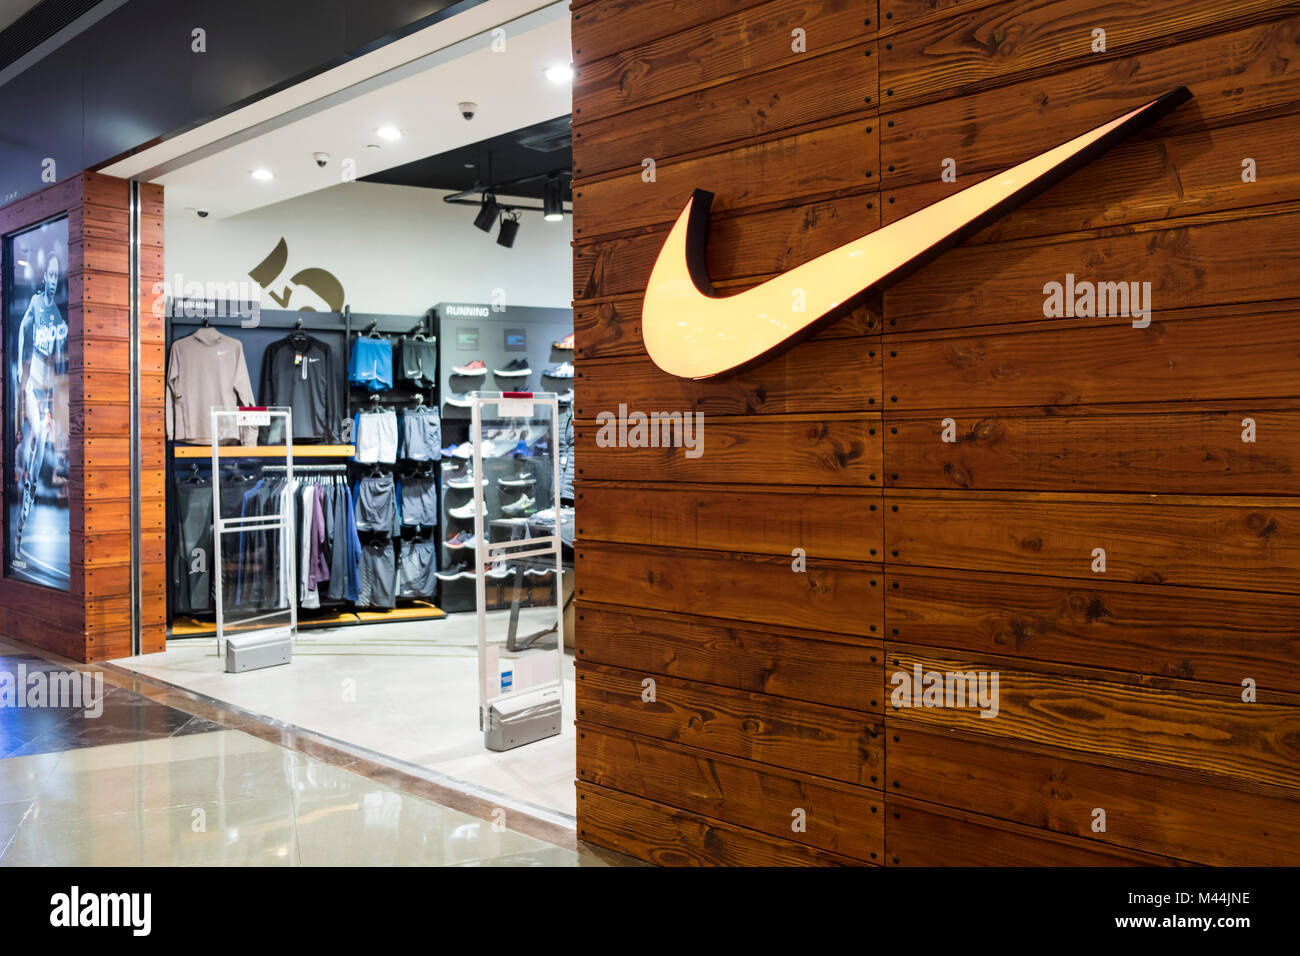 Nike logo in shop in -Fotos und -Bildmaterial in hoher Auflösung – Alamy